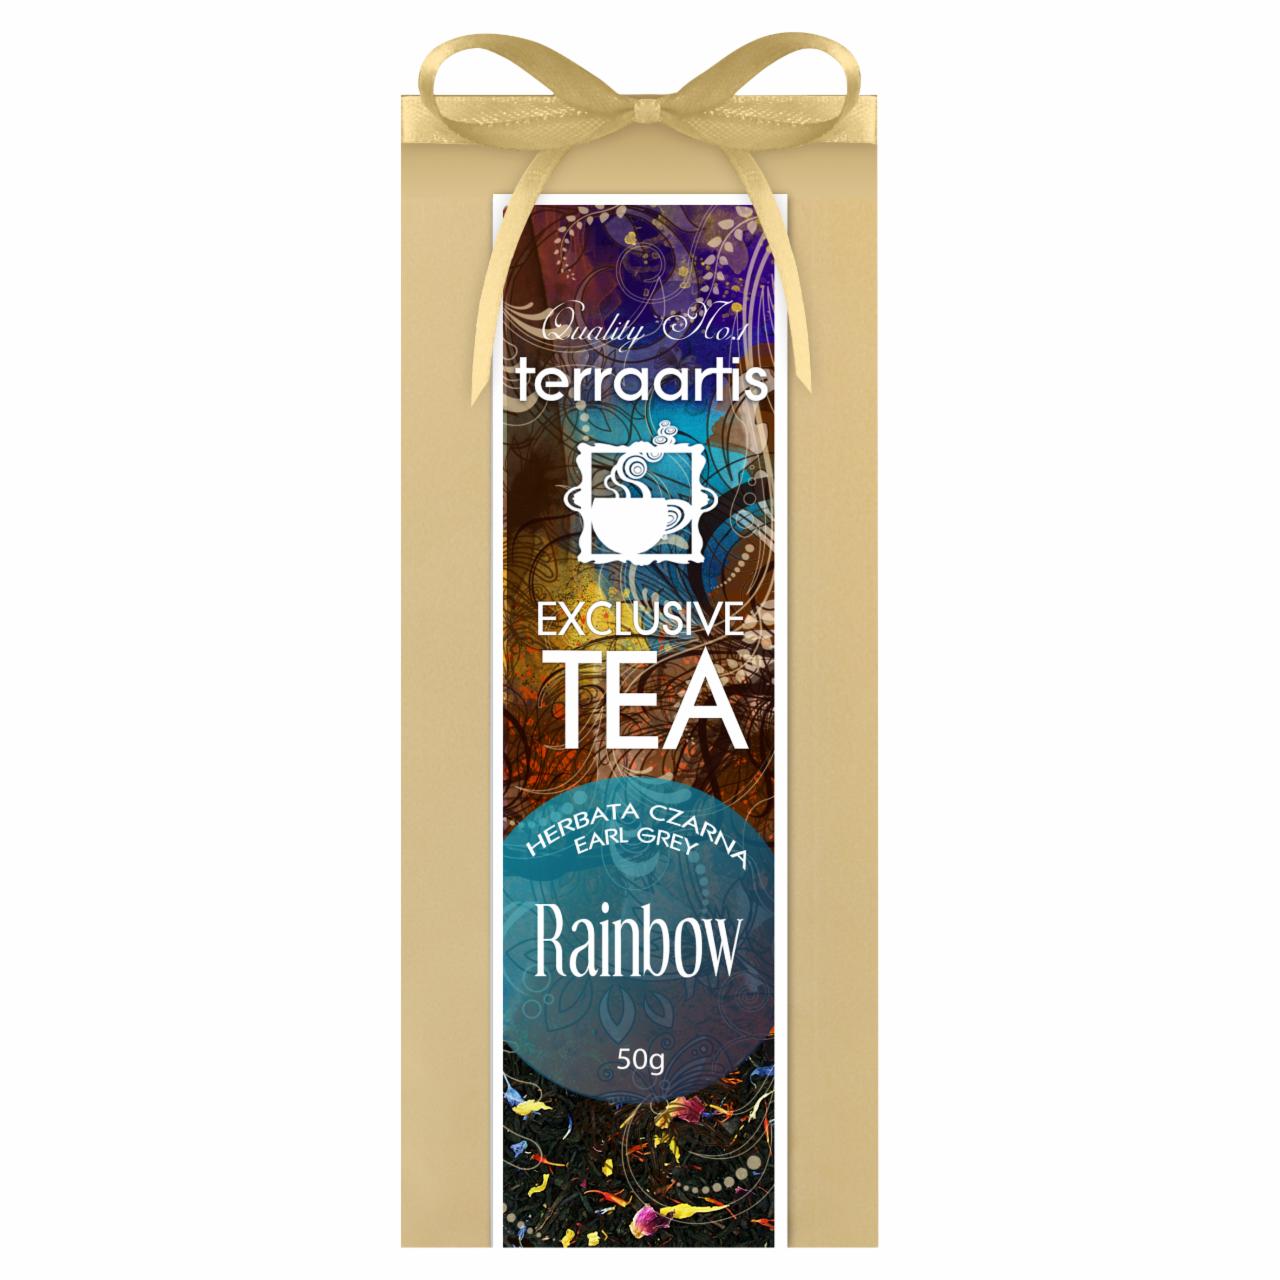 Zdjęcia - Terraartis Exclusive Tea Herbata czarna Earl Grey Rainbow 50 g